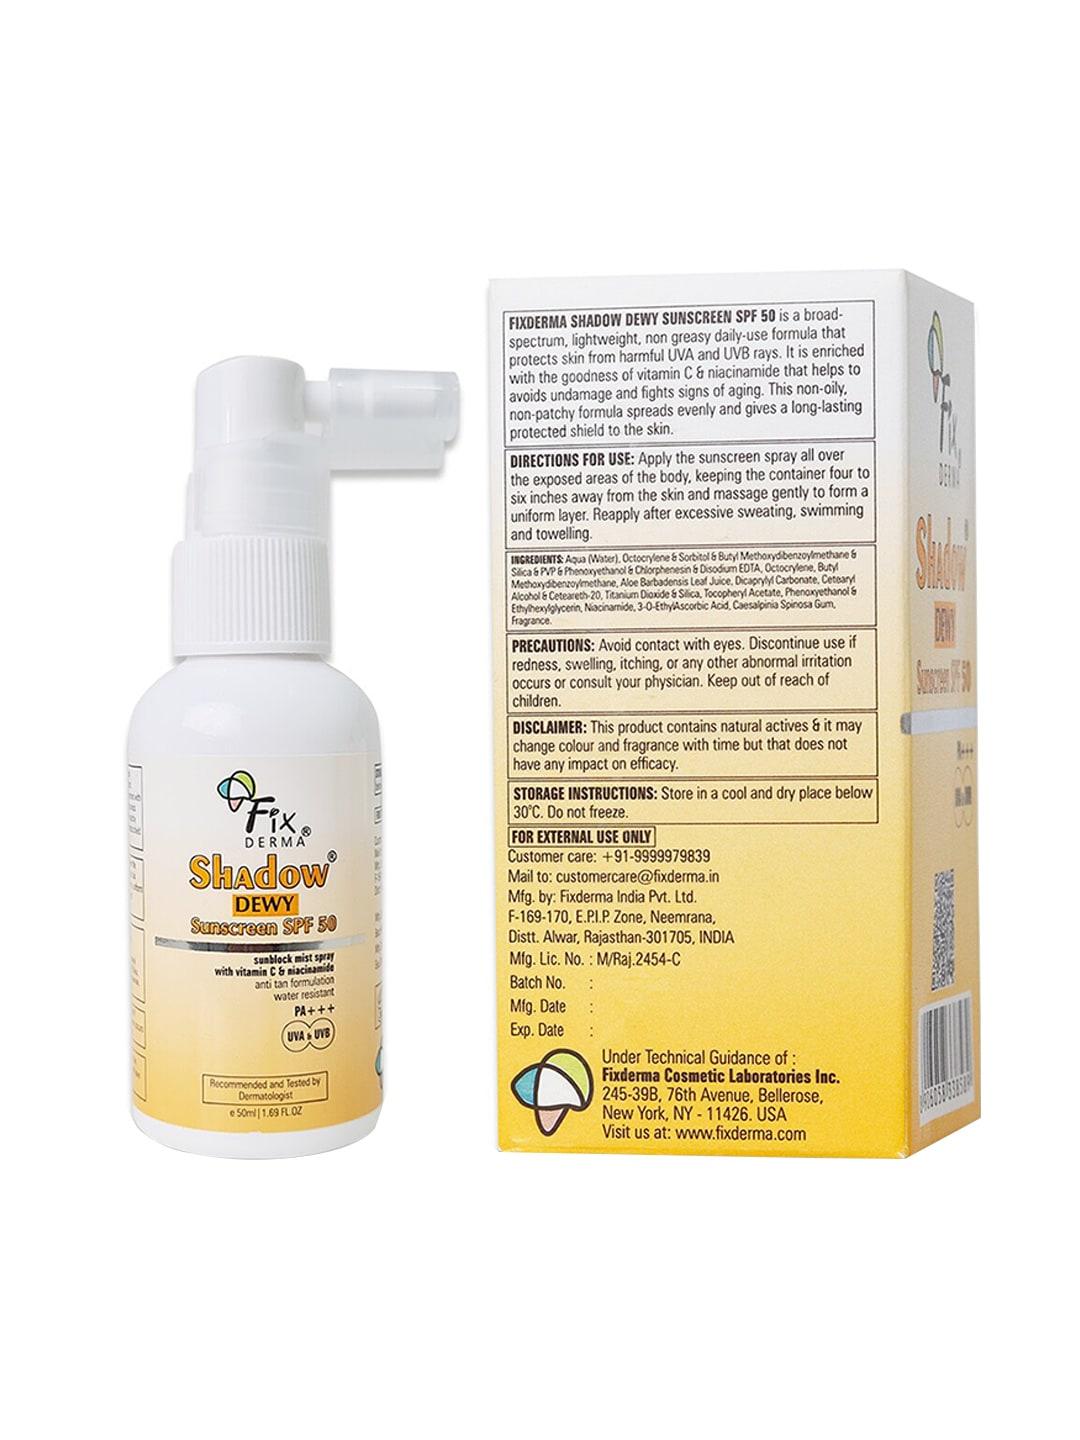 fixderma shadow dewy spf 50 sunscreen mist spray with vitamin c & niacinamide - 50 ml